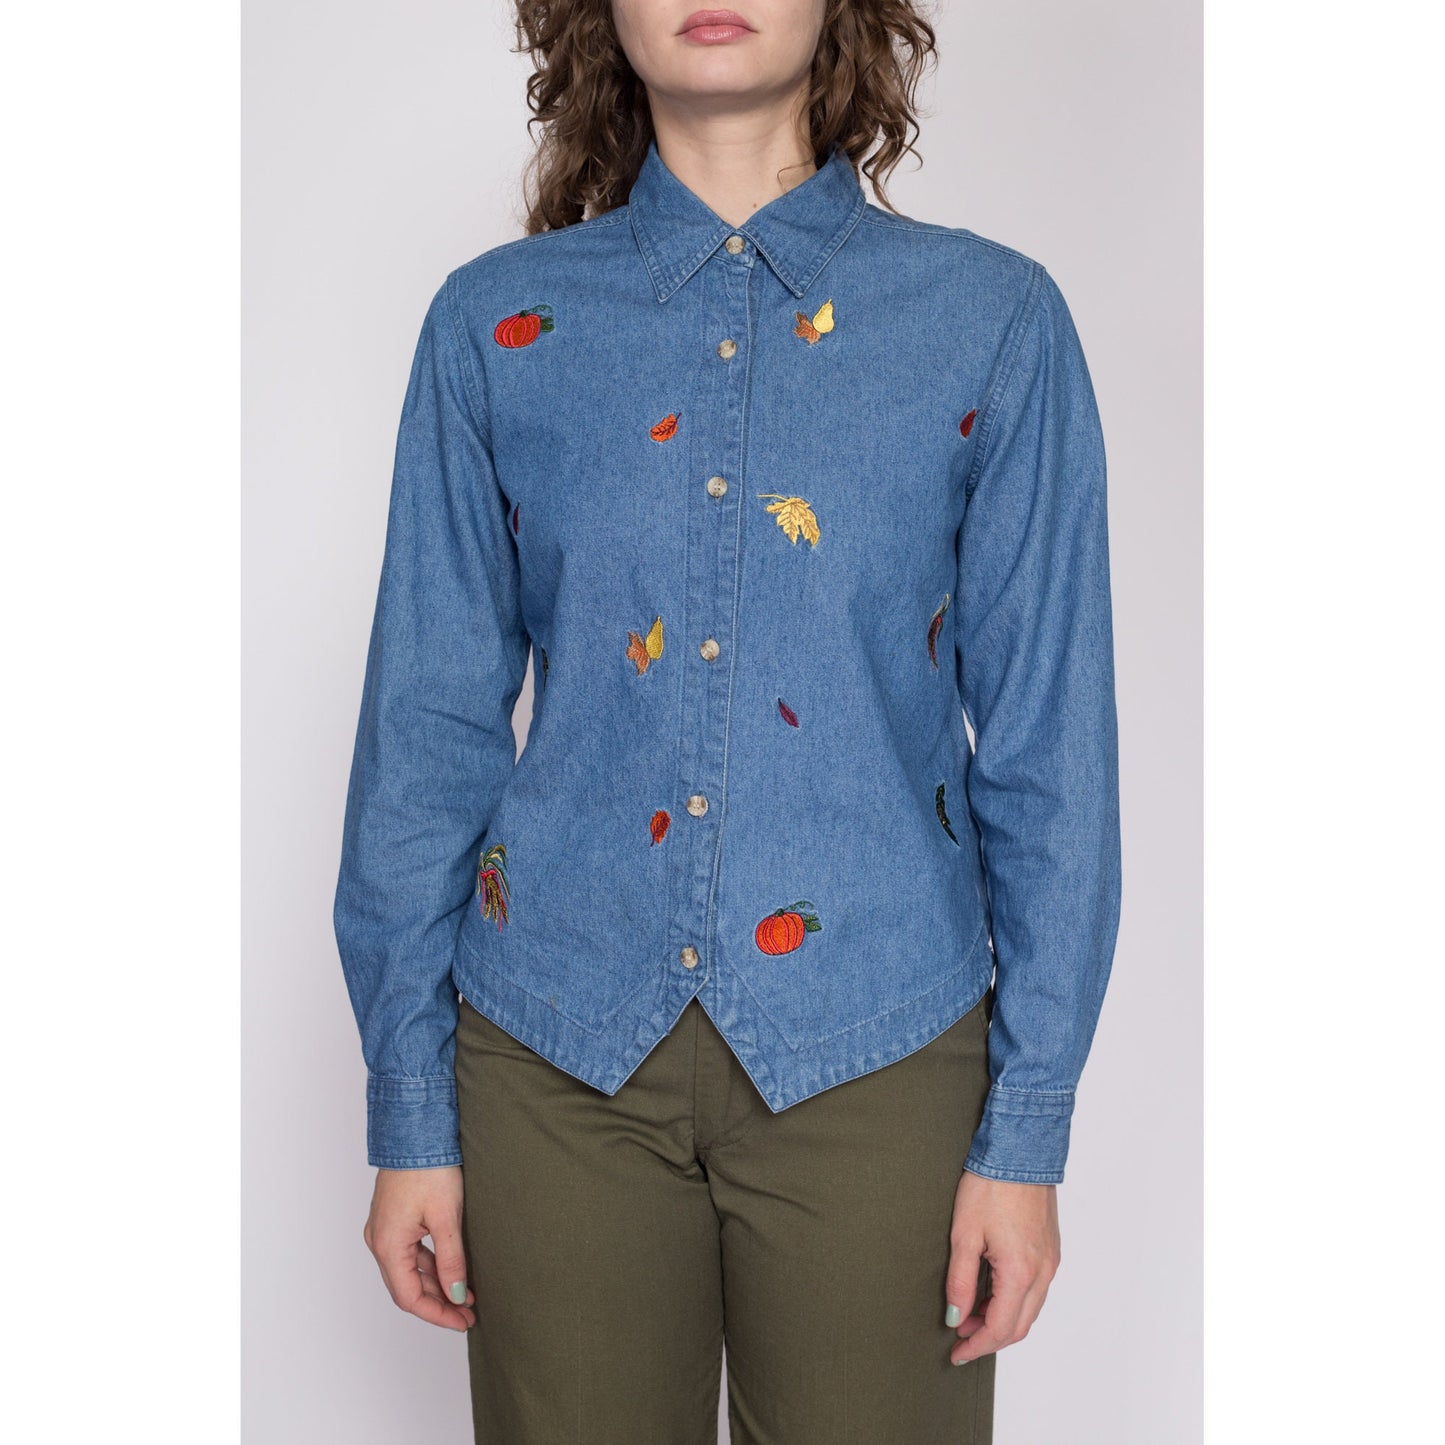 Medium 90s Fall Motif Chambray Button Up Shirt | Vintage Long Sleeve Collared Denim Top